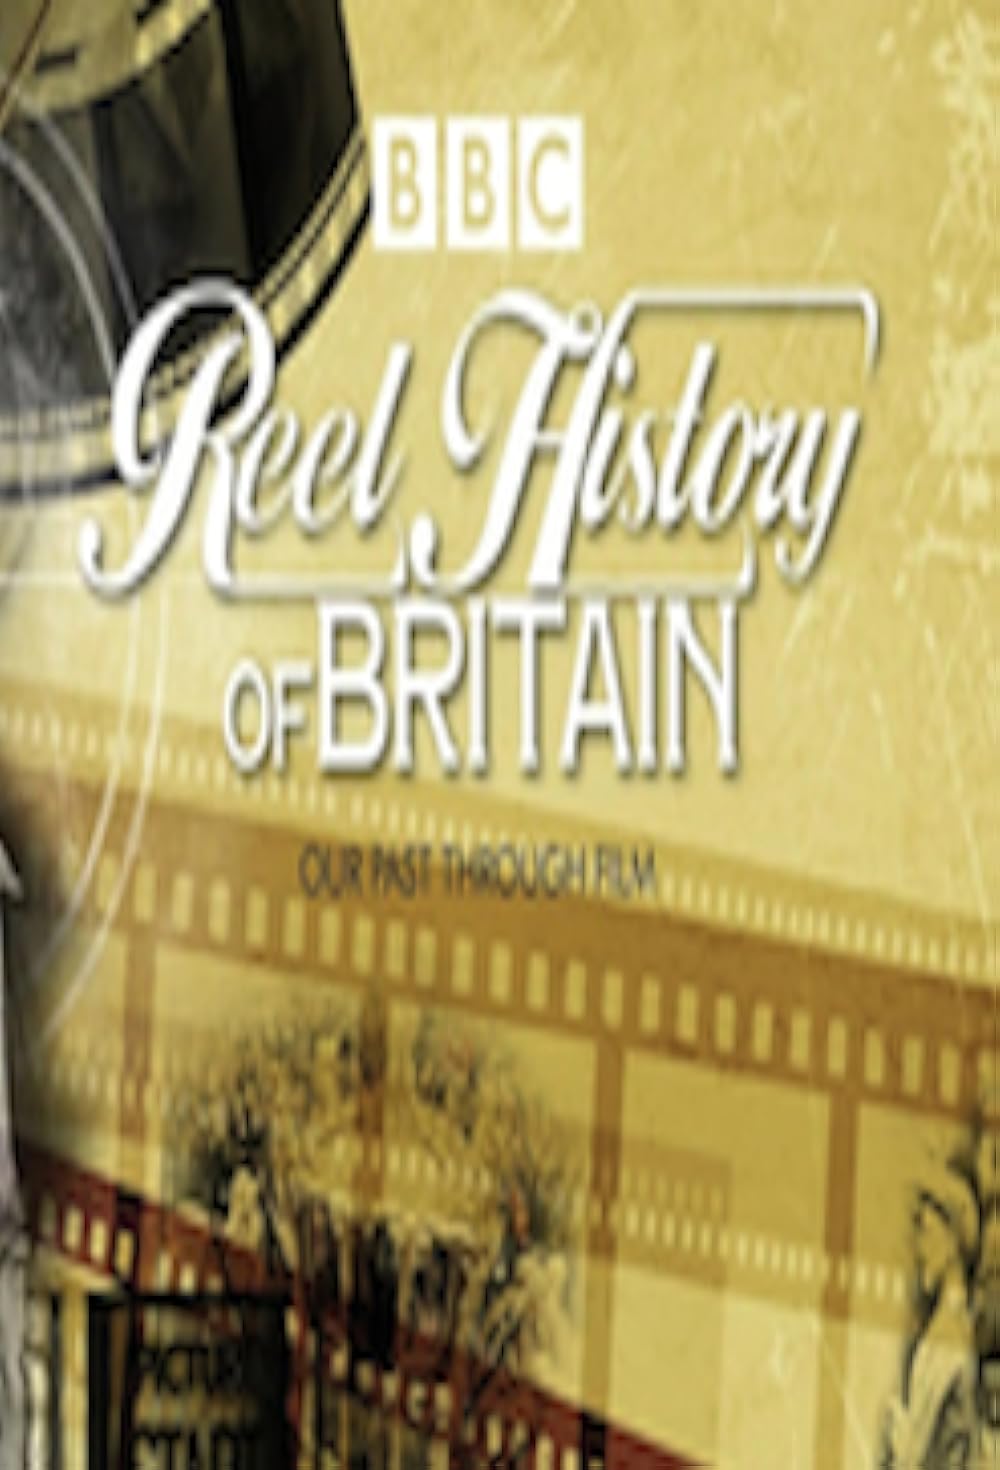 Reel History of Britain